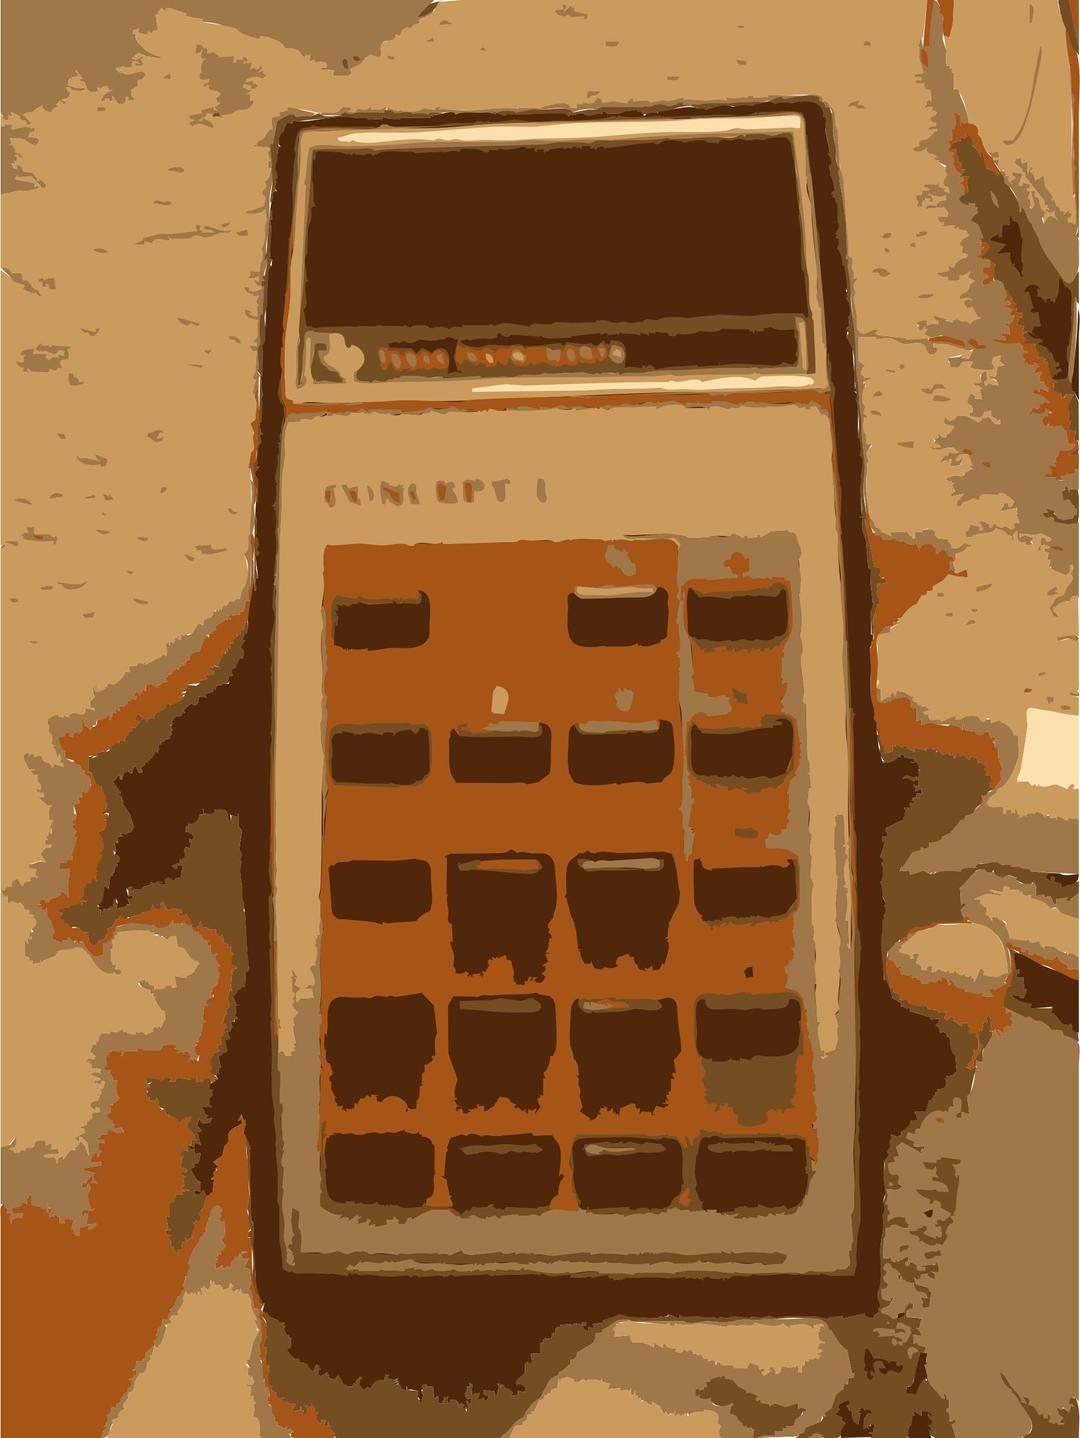 More Old Calculator png transparent